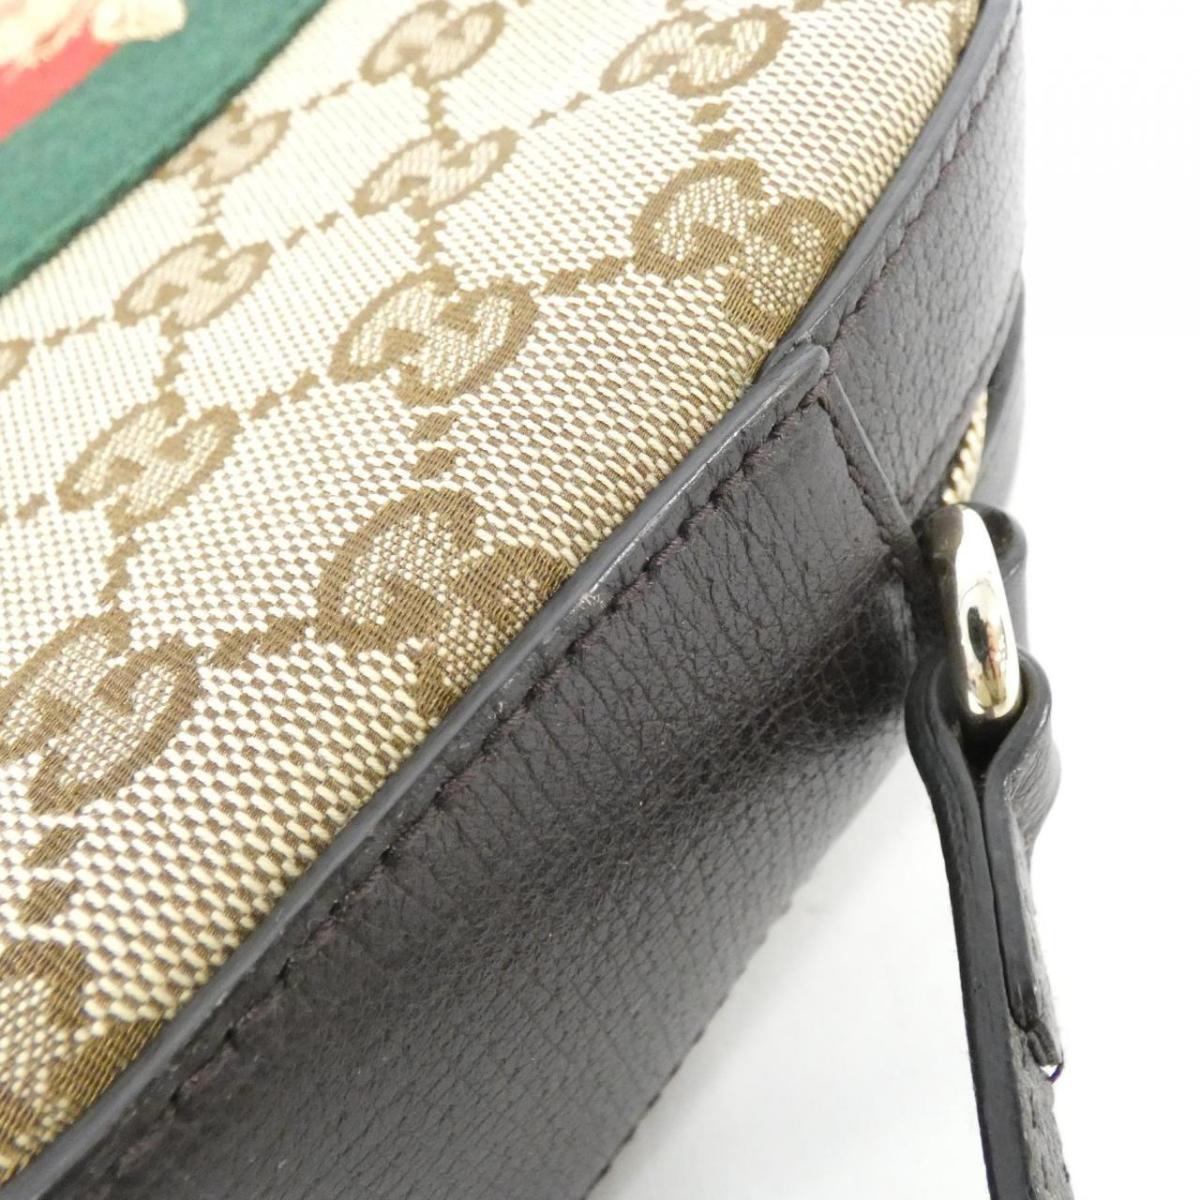 Gucci 412008 KQWYG Shoulder Bag